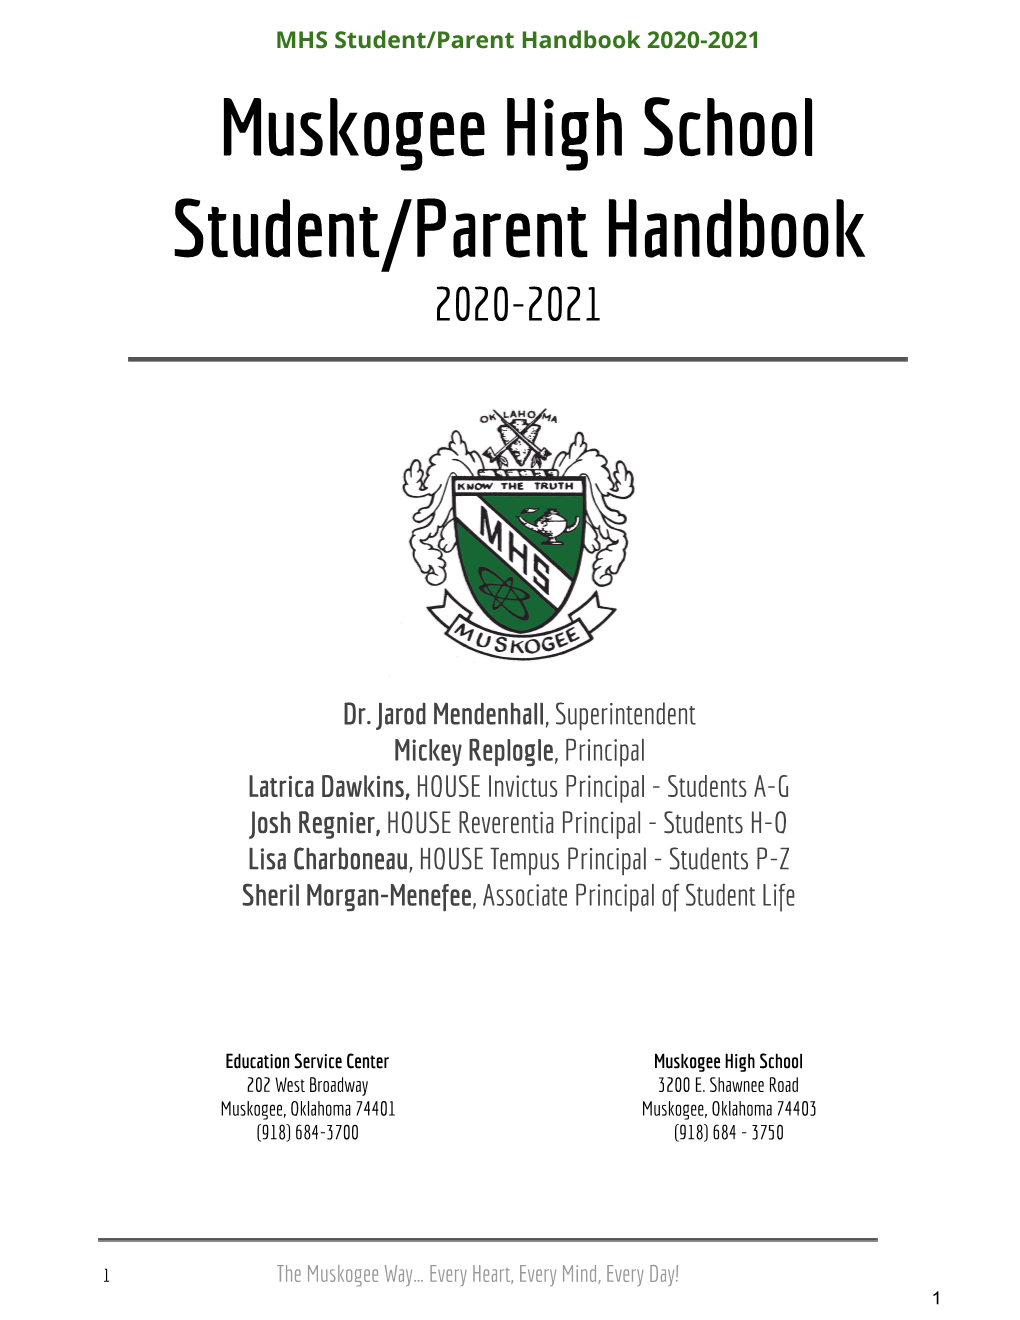 Muskogee High School Student/Parent Handbook